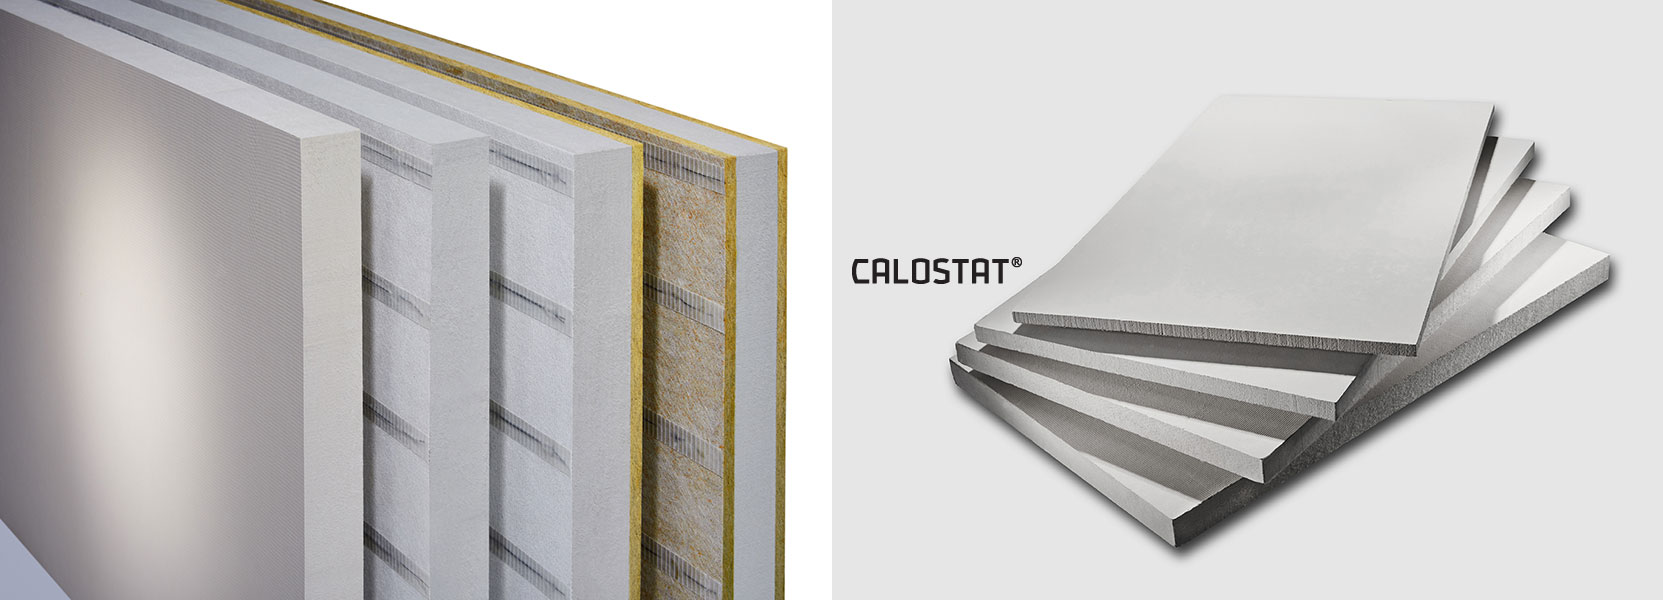 CALOSTAT® Insulation Panel Range and CALOSTAT® Pure